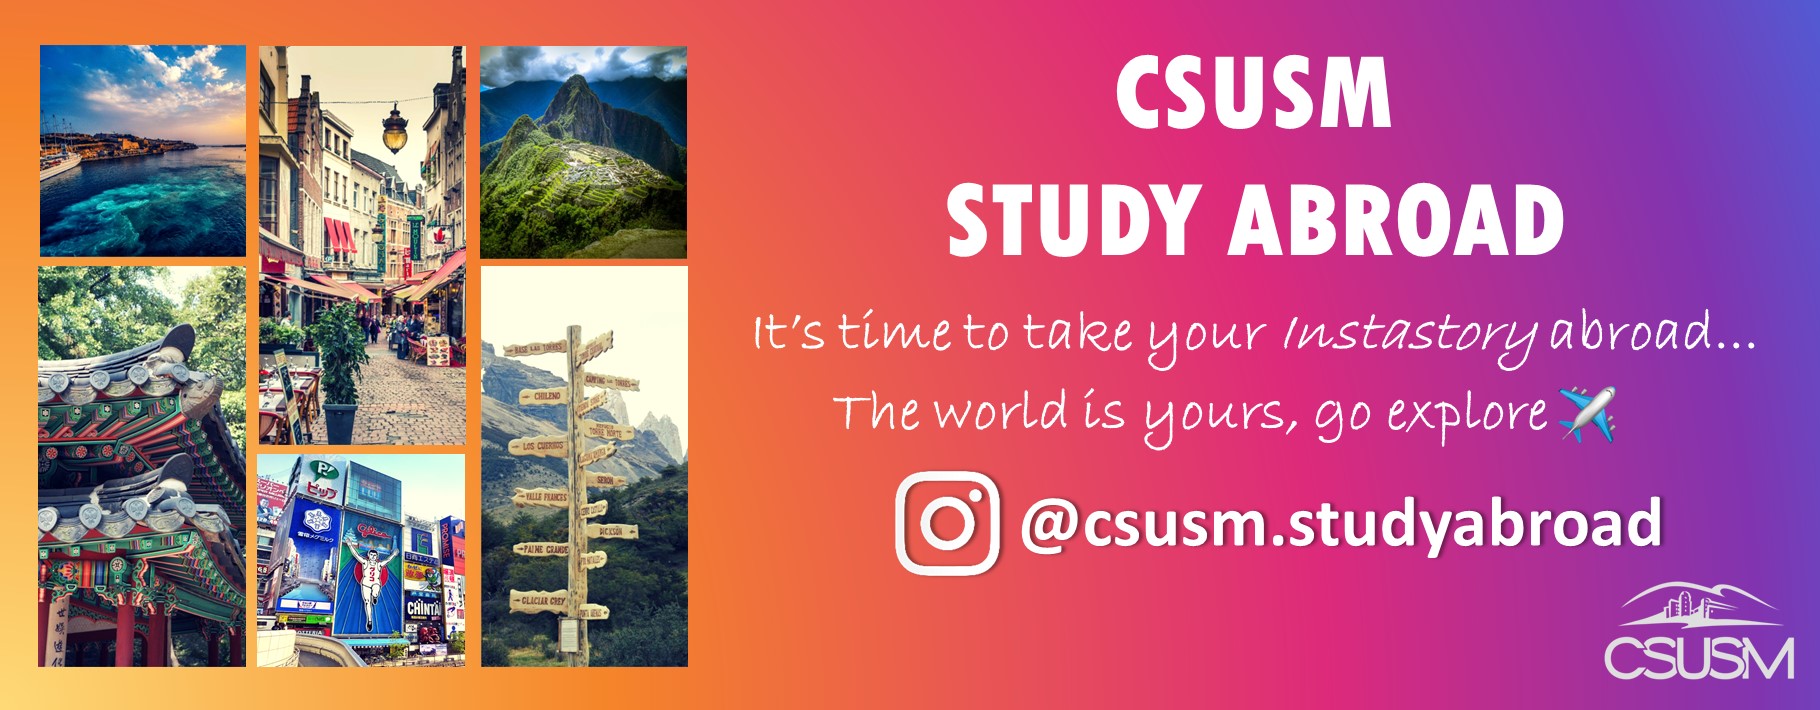 Study abroad instagram @csusm.studyabroad